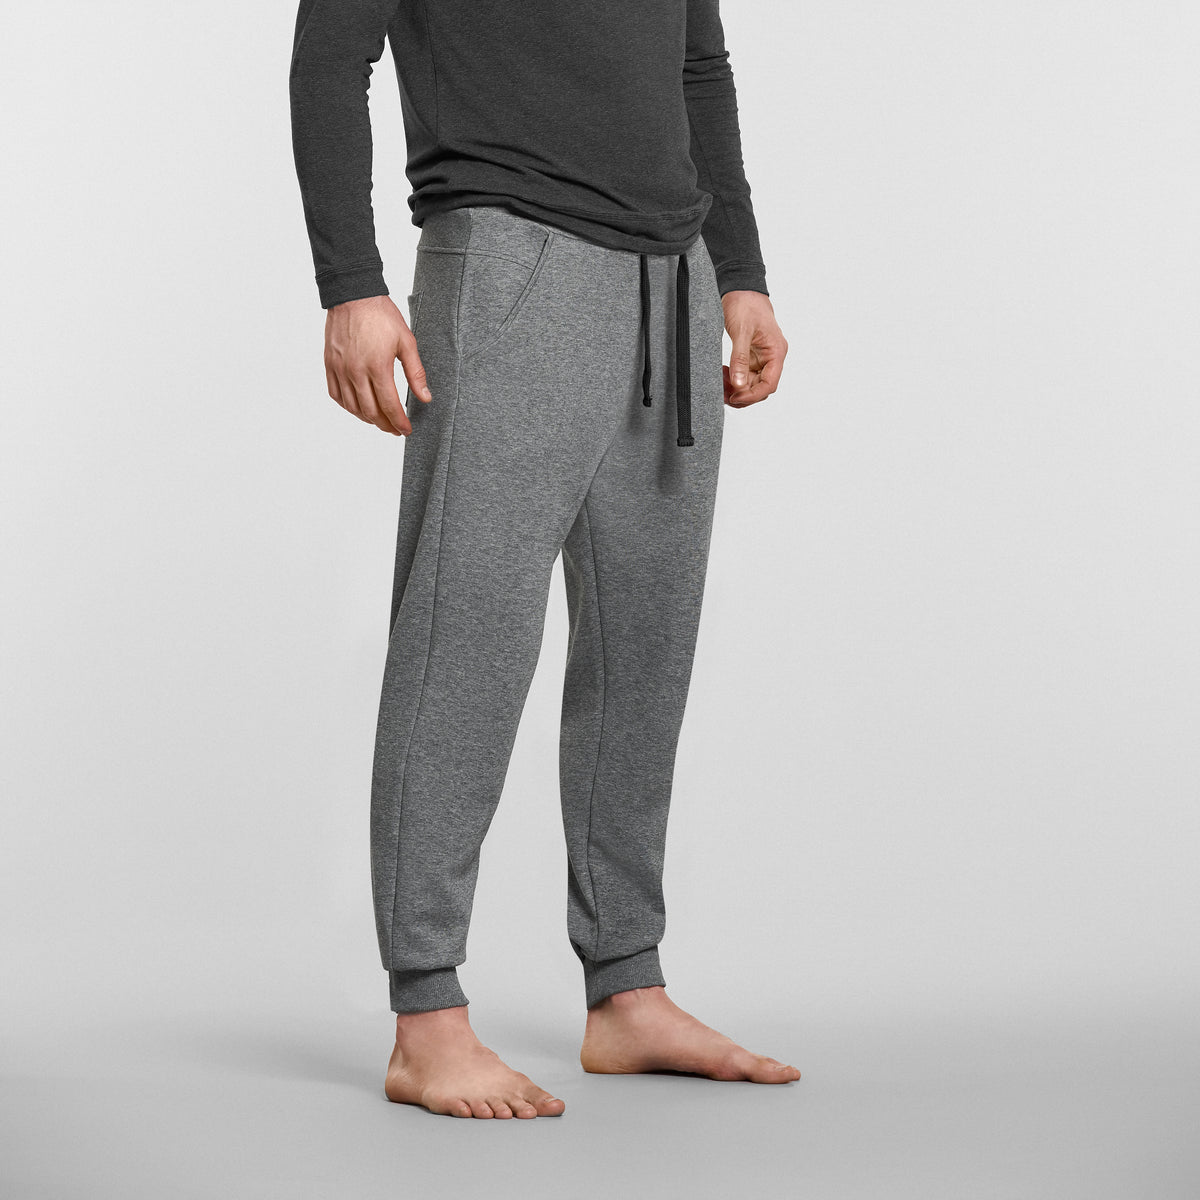 man wearing grey mens yoga pants by warrior addict 